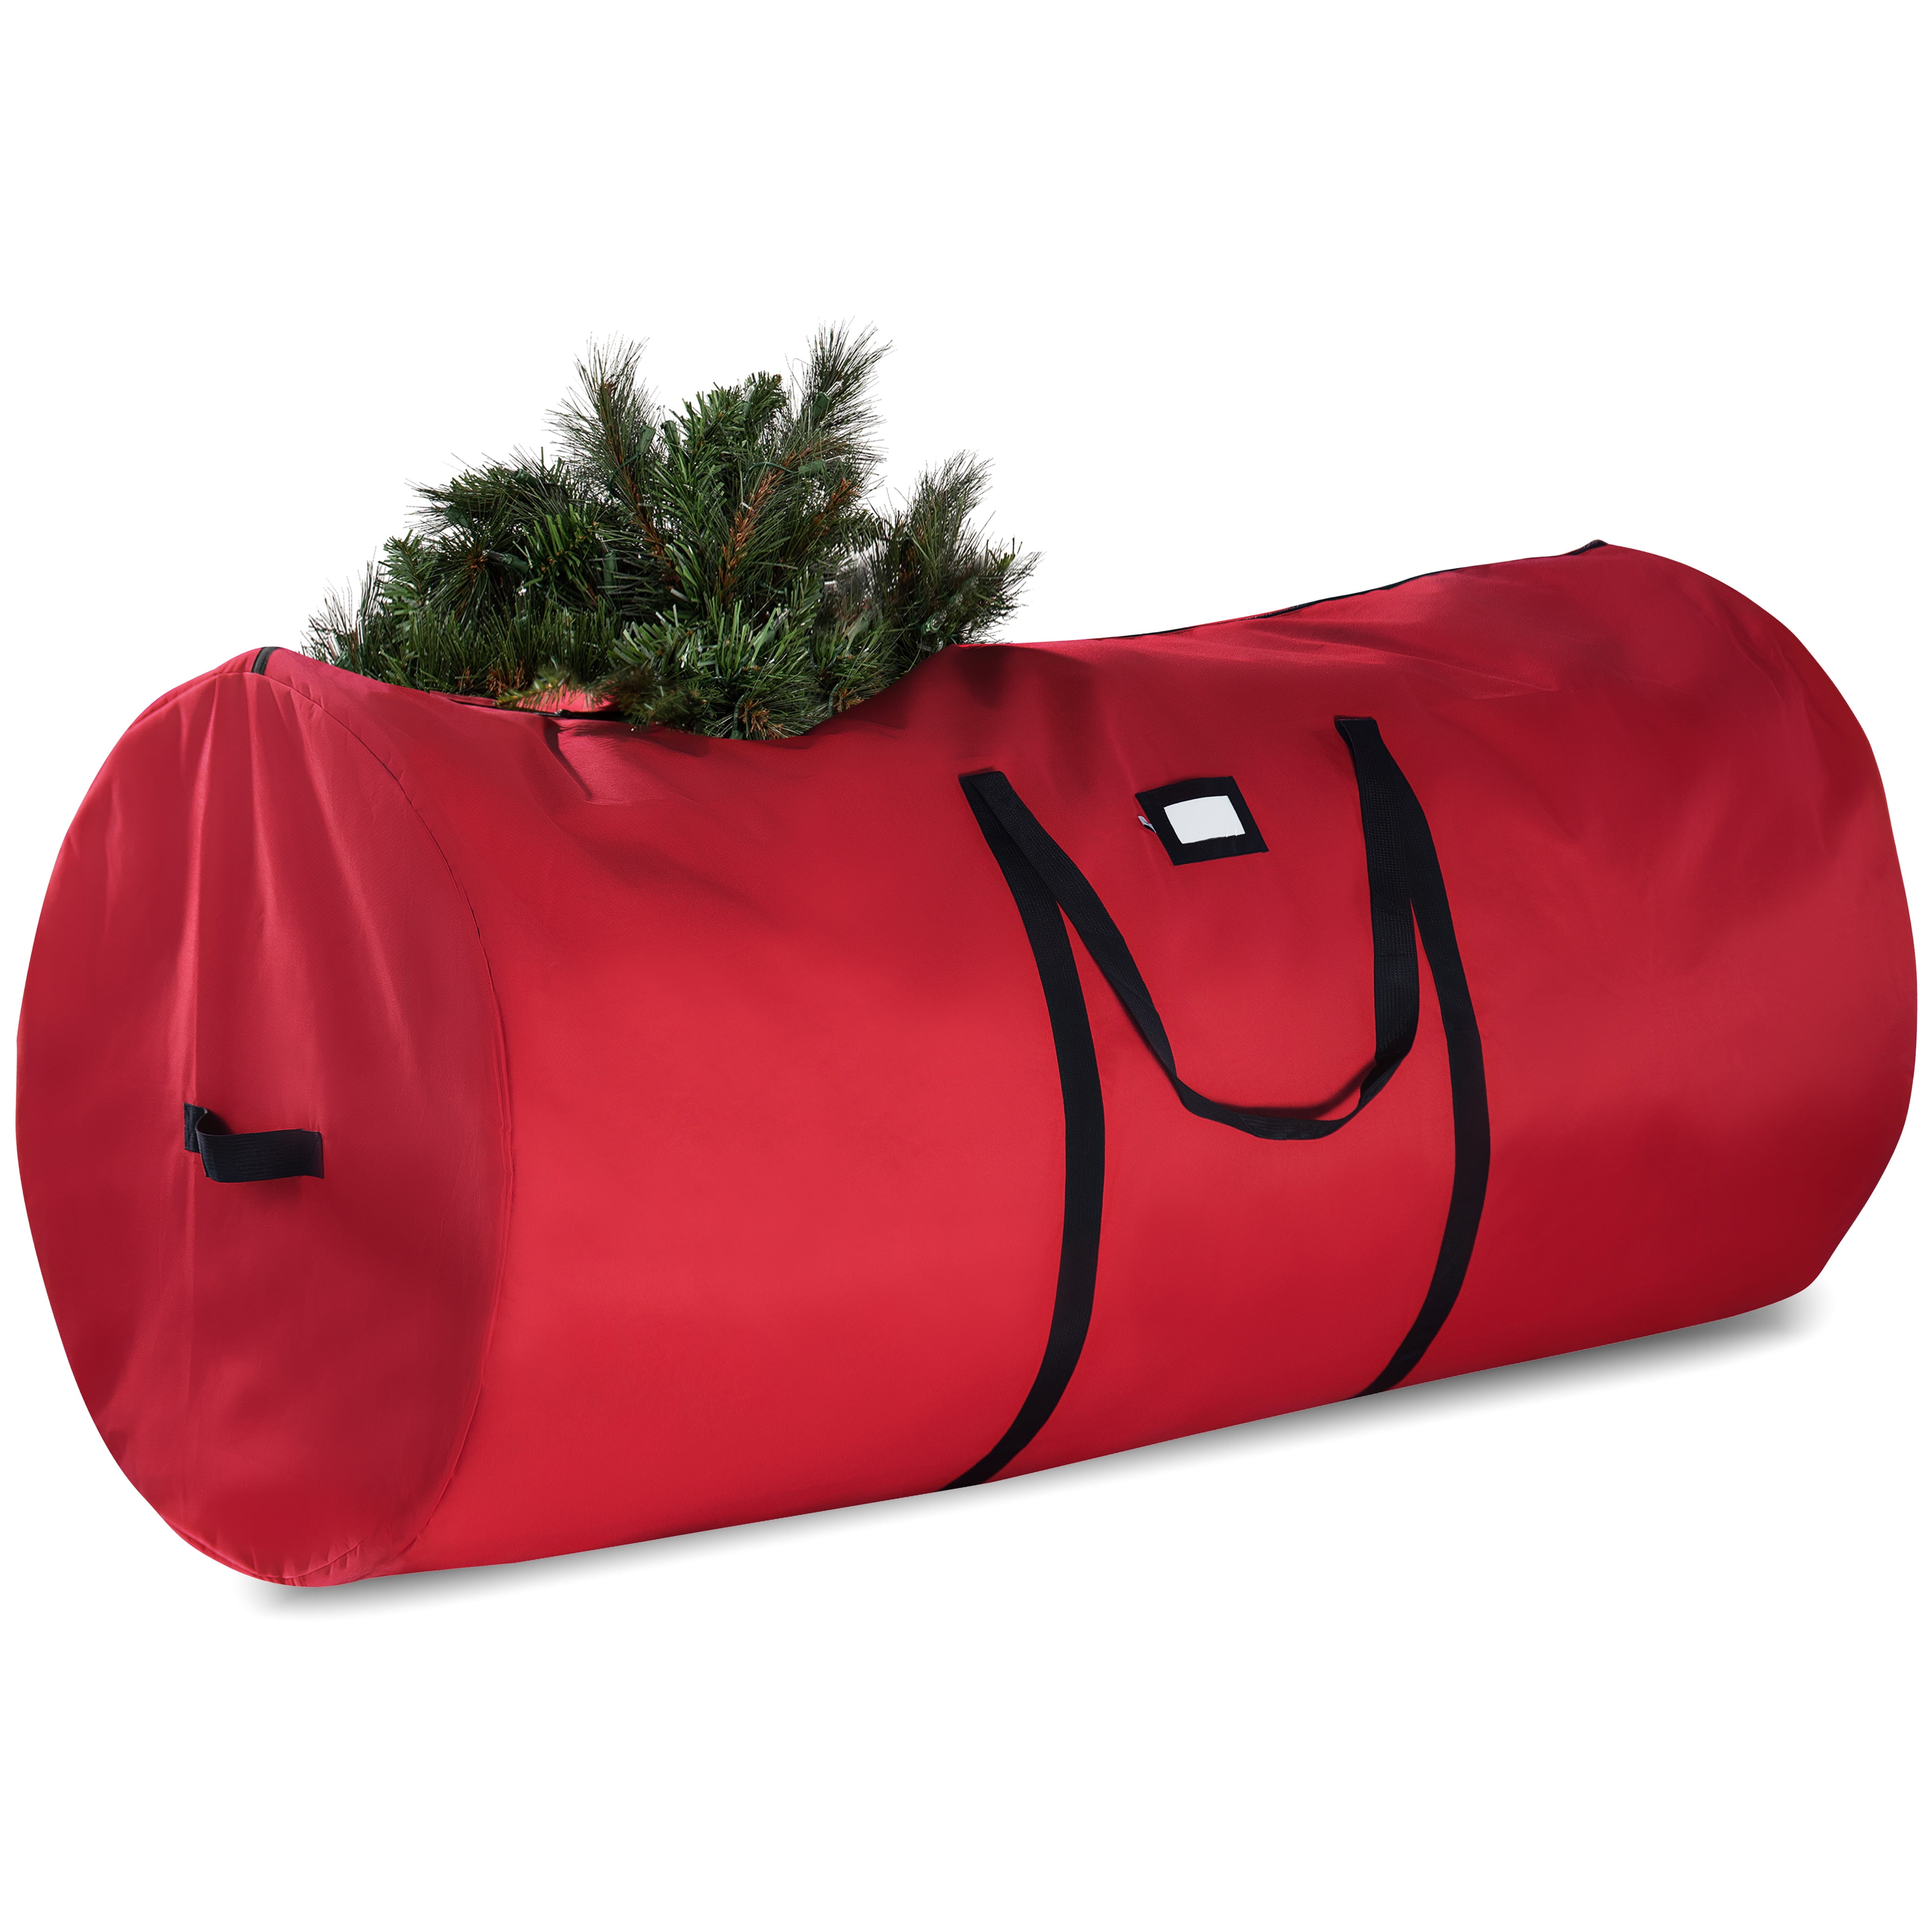 New Christmas Tree Storage Bag Cover 61"X27"X27" Xmas Holiday Free Shipping 